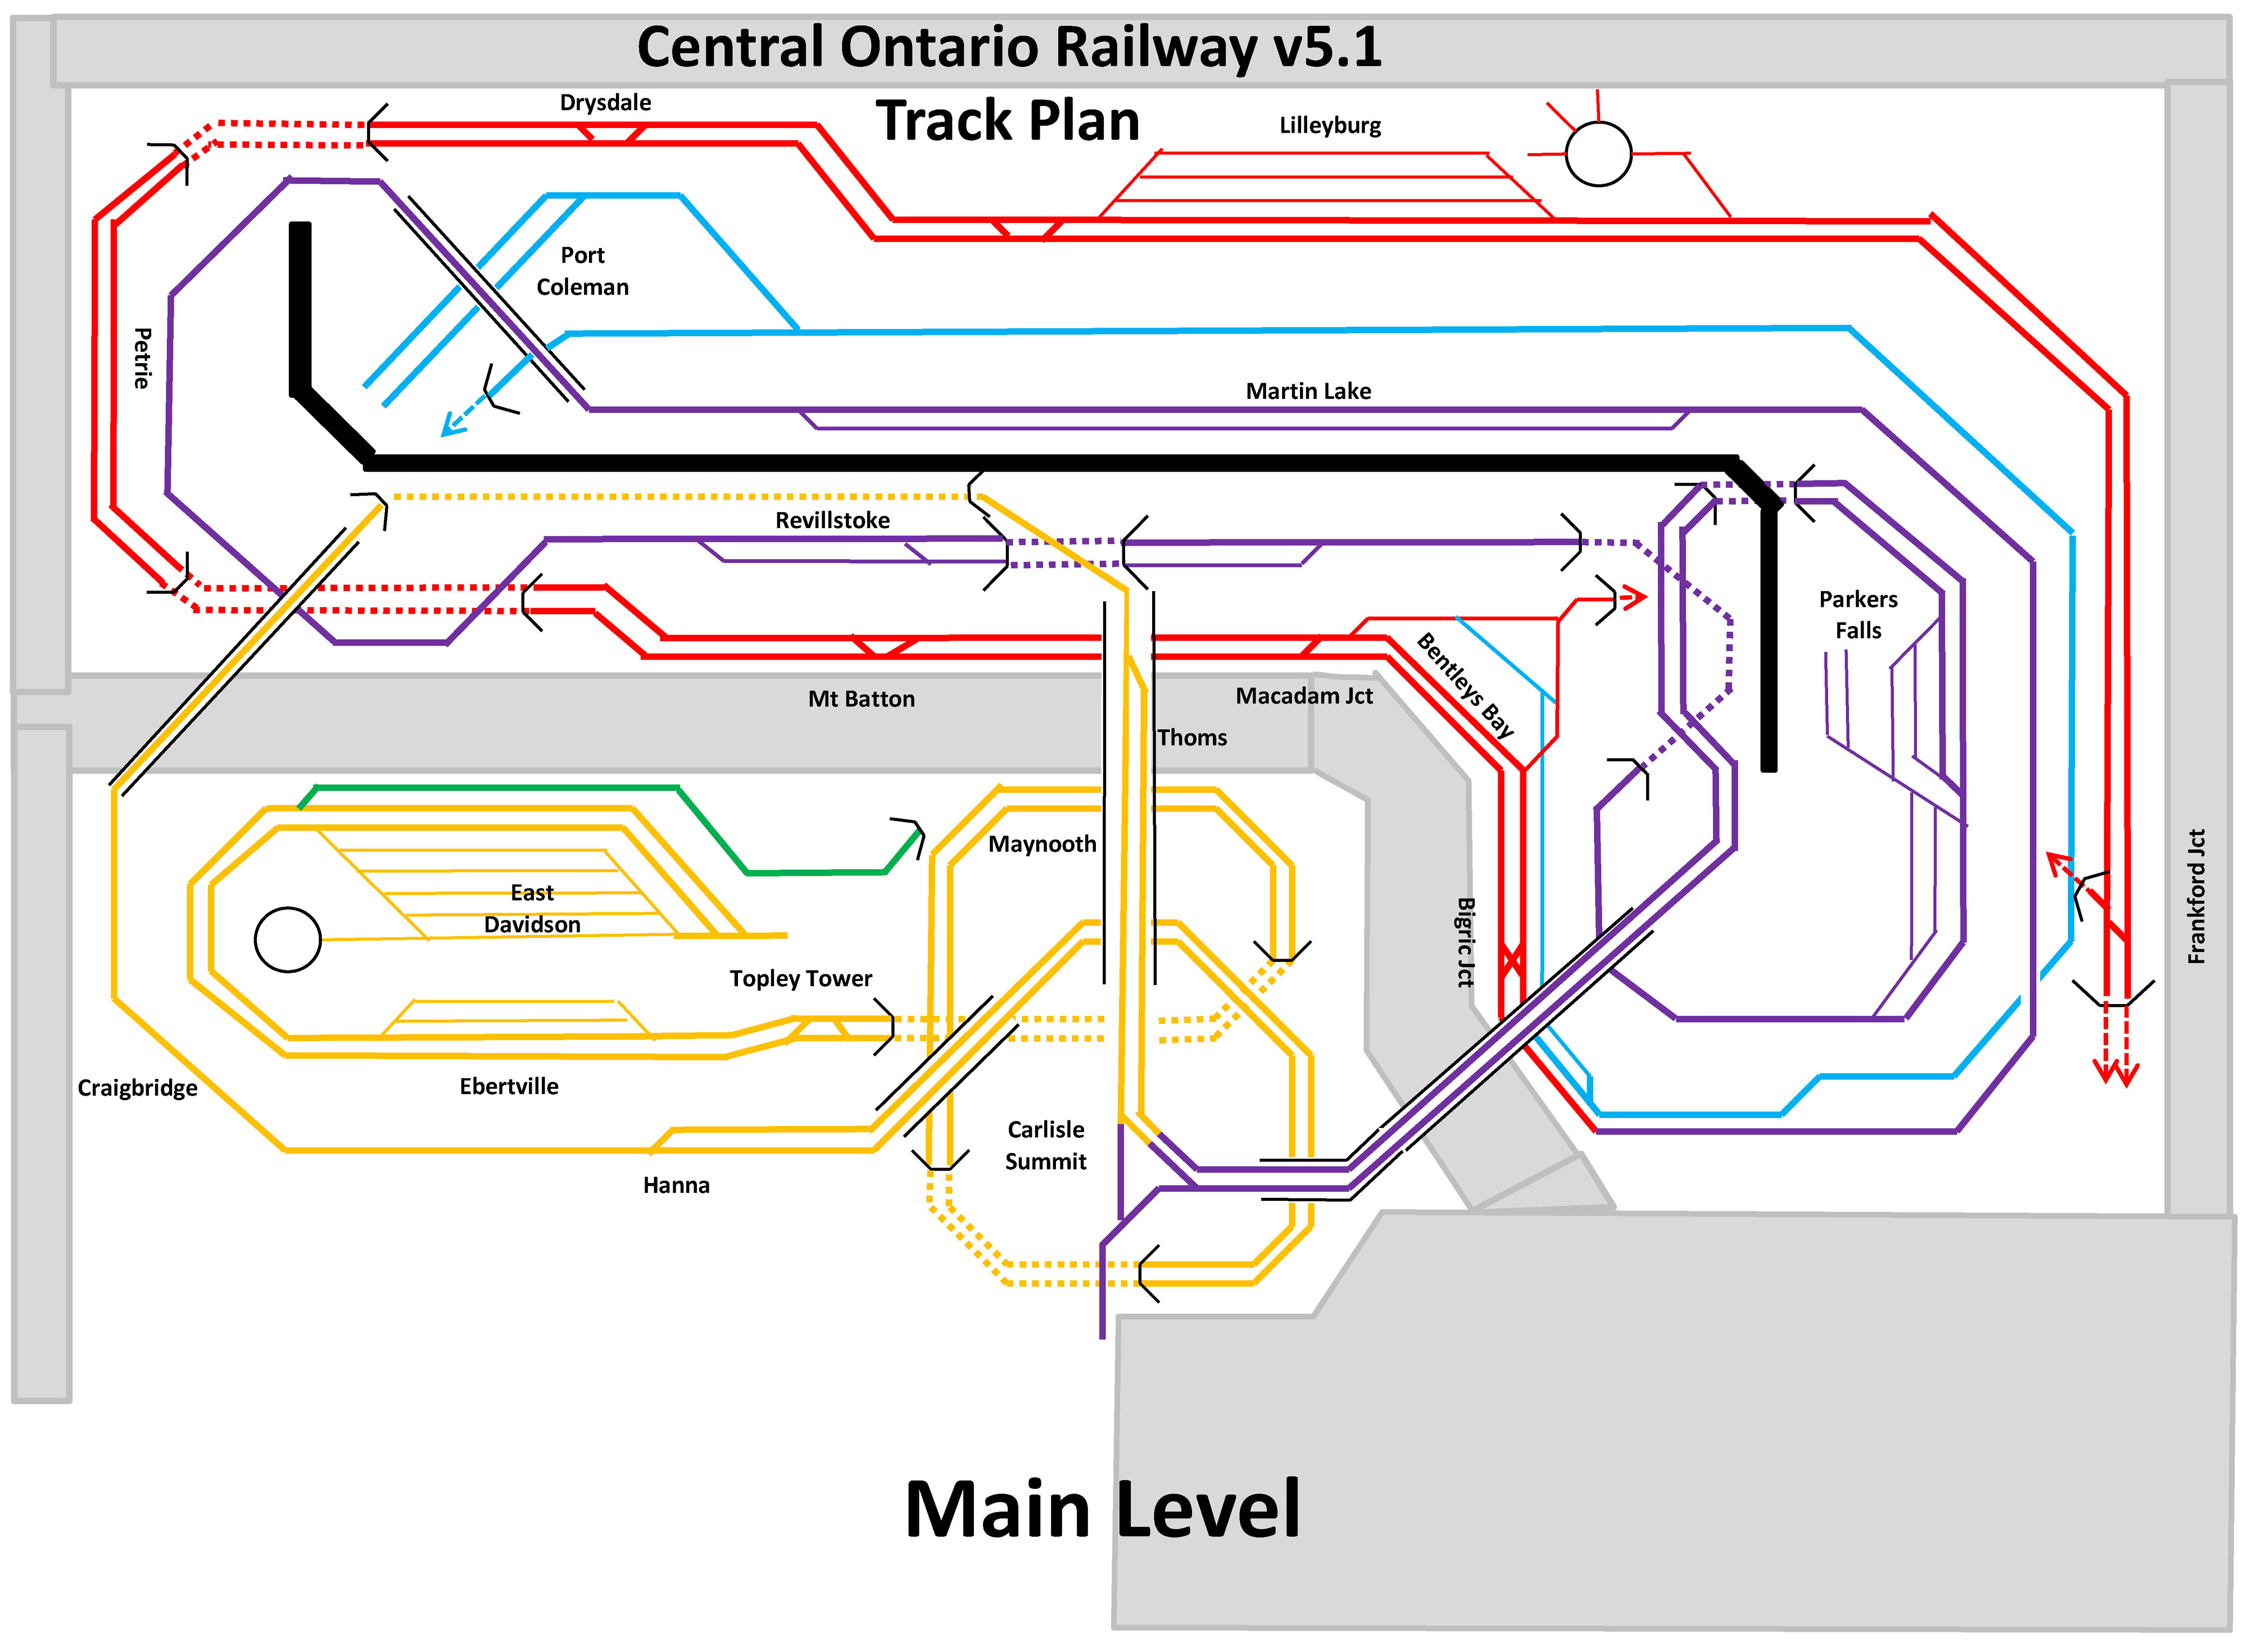 Central Ontario Railway - Main Level Track Plan